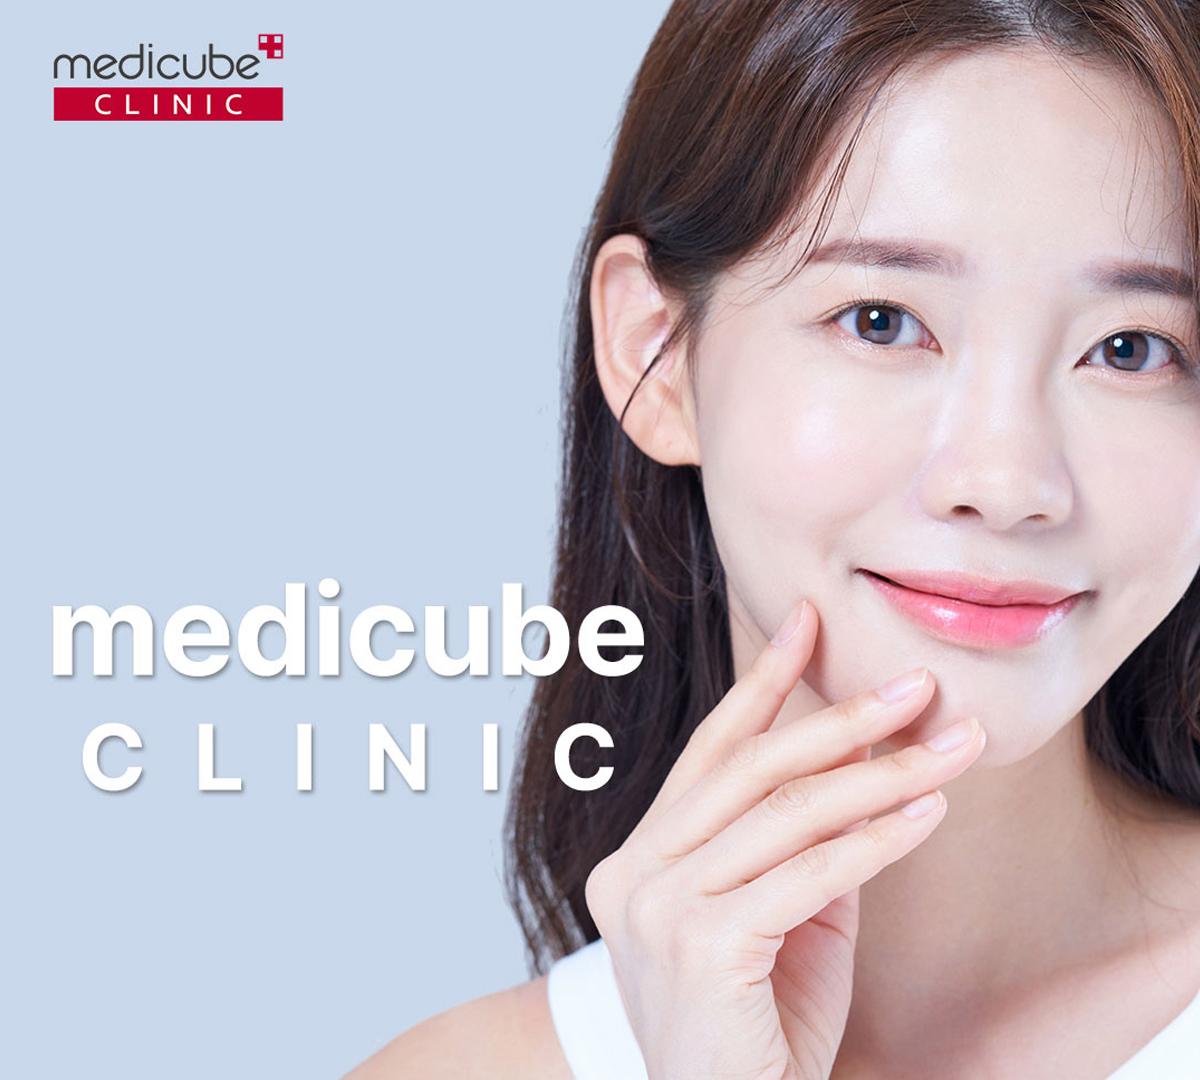 Medicube Clinic